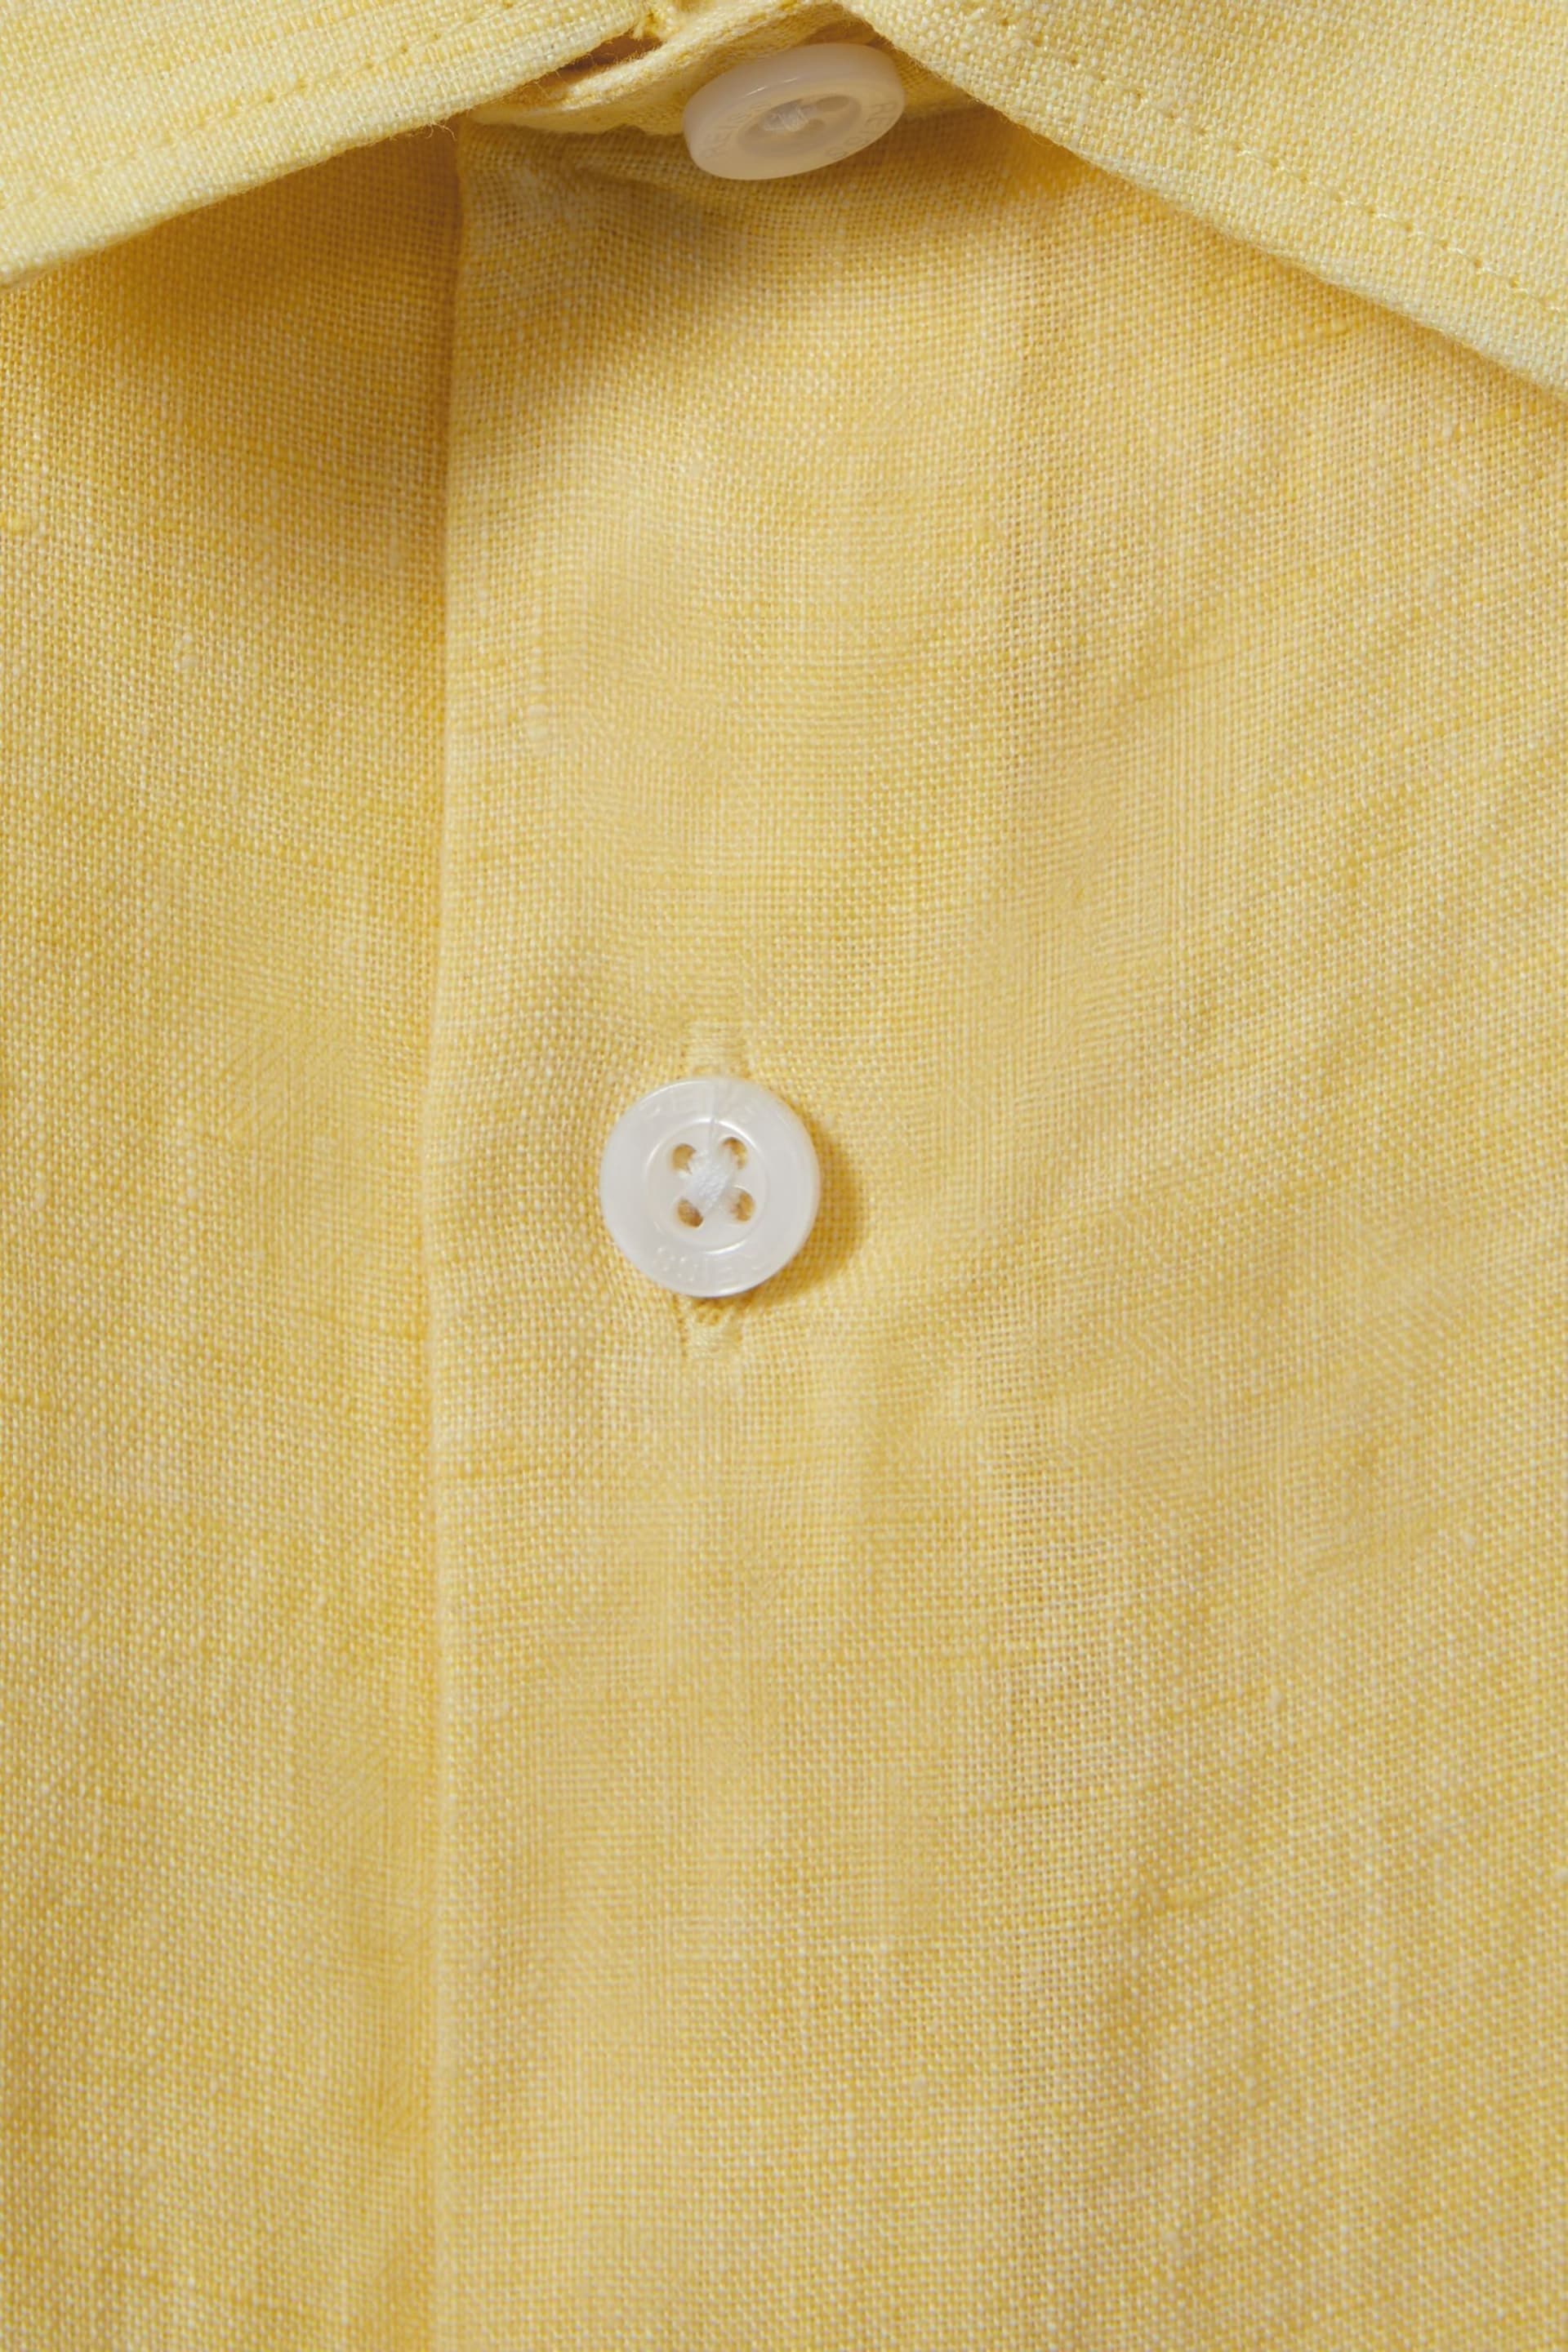 Reiss Melon Holiday Junior Short Sleeve Linen Shirt - Image 3 of 3